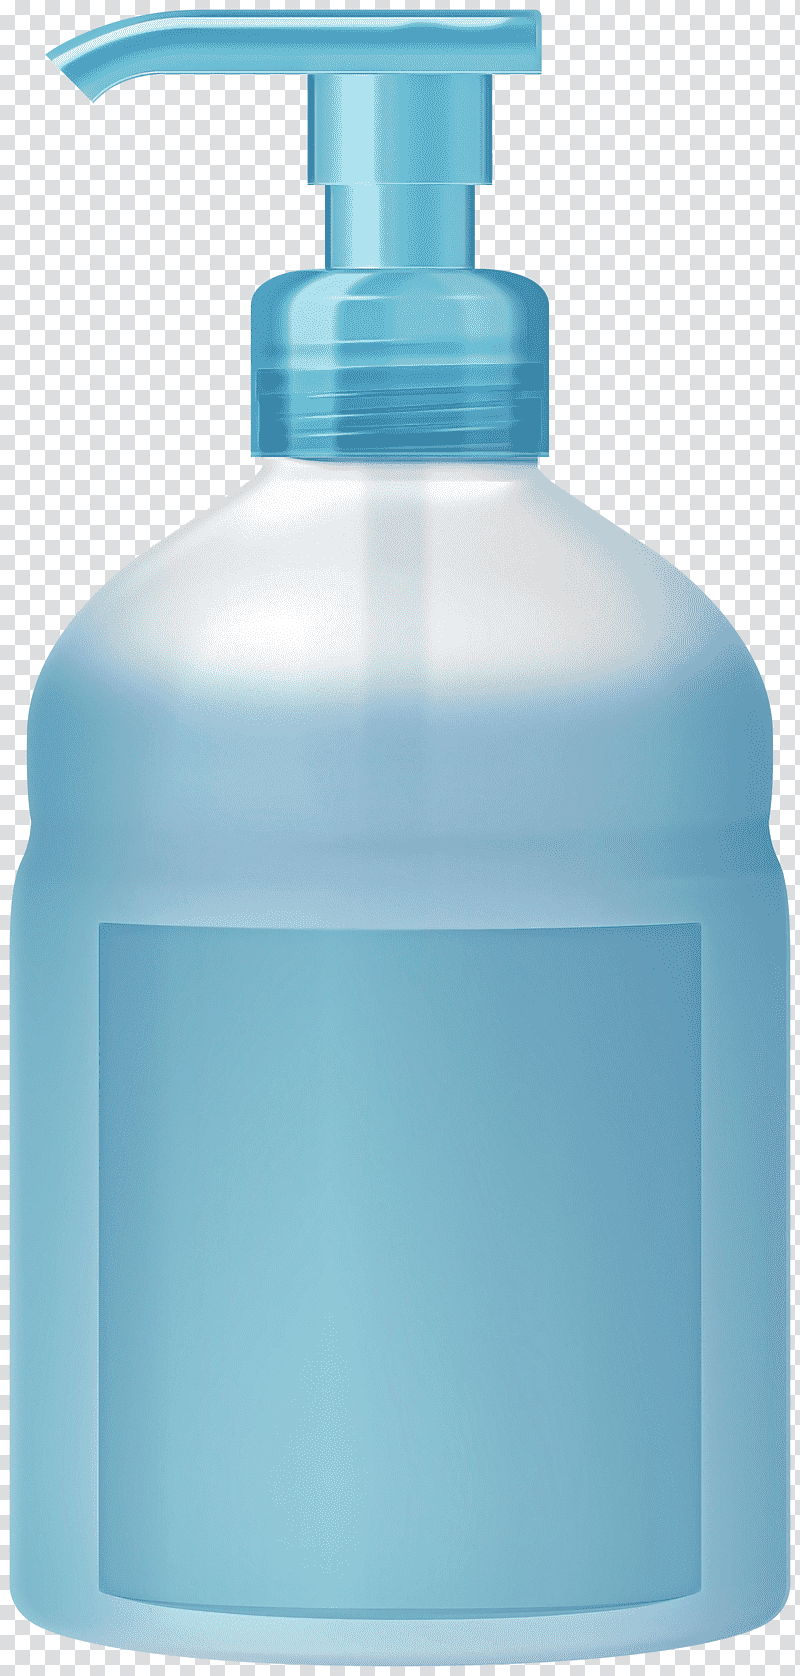 Plastic bottle, Water Bottle, Soap Dispenser, Liquid, Lotion, Microsoft Azure, Chemistry transparent background PNG clipart